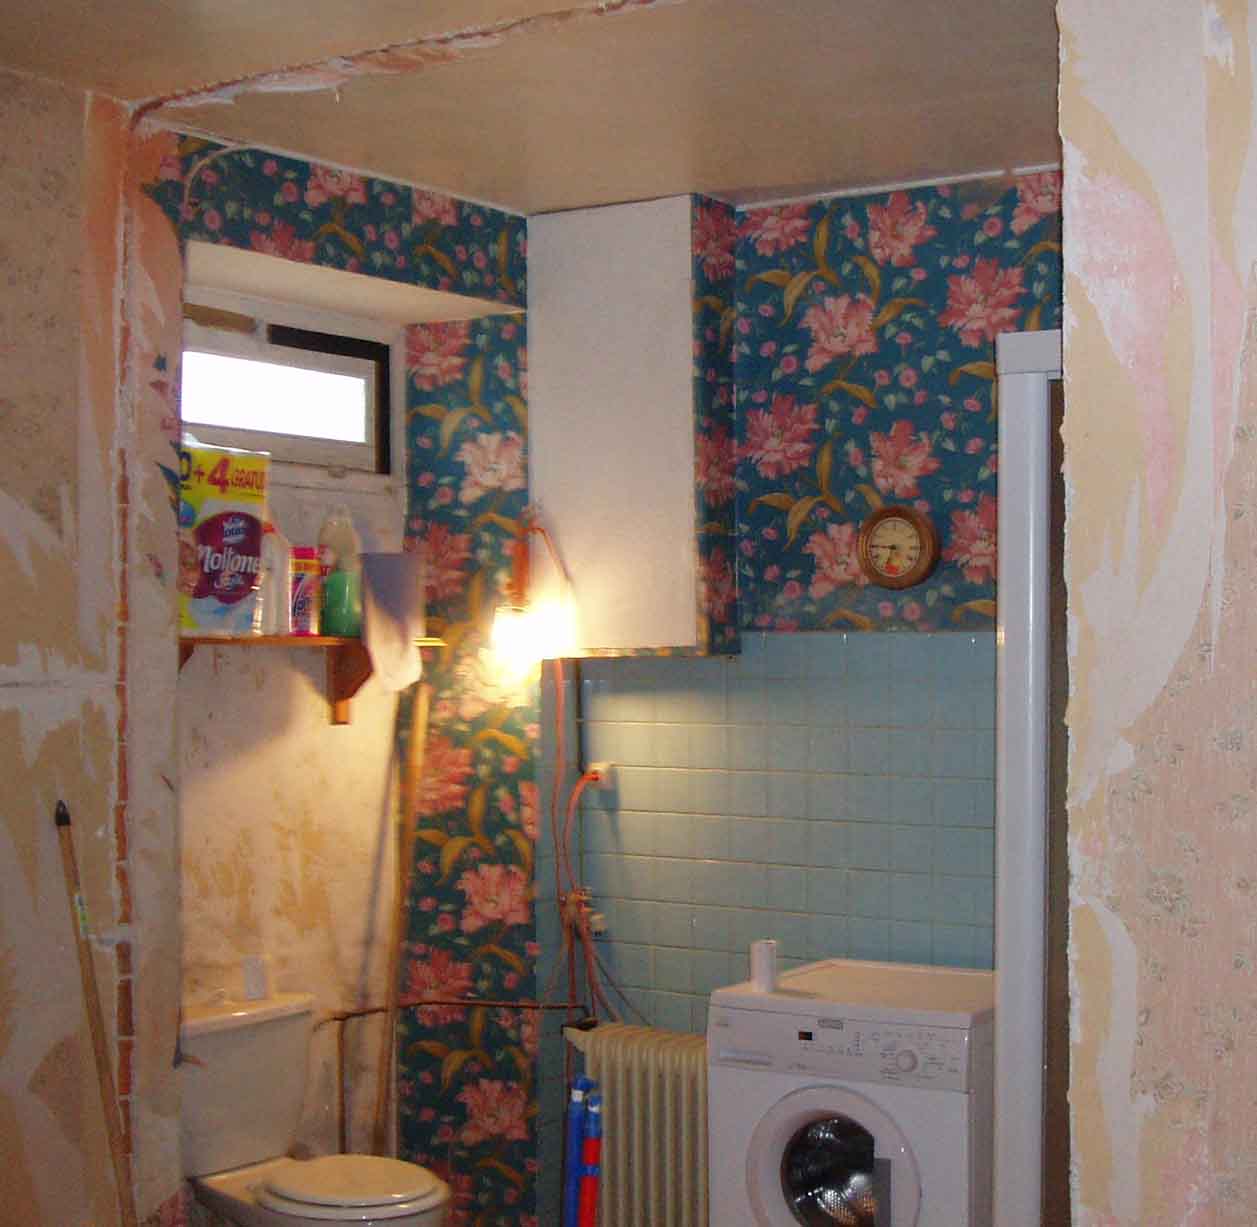 Image of original state of bathroom